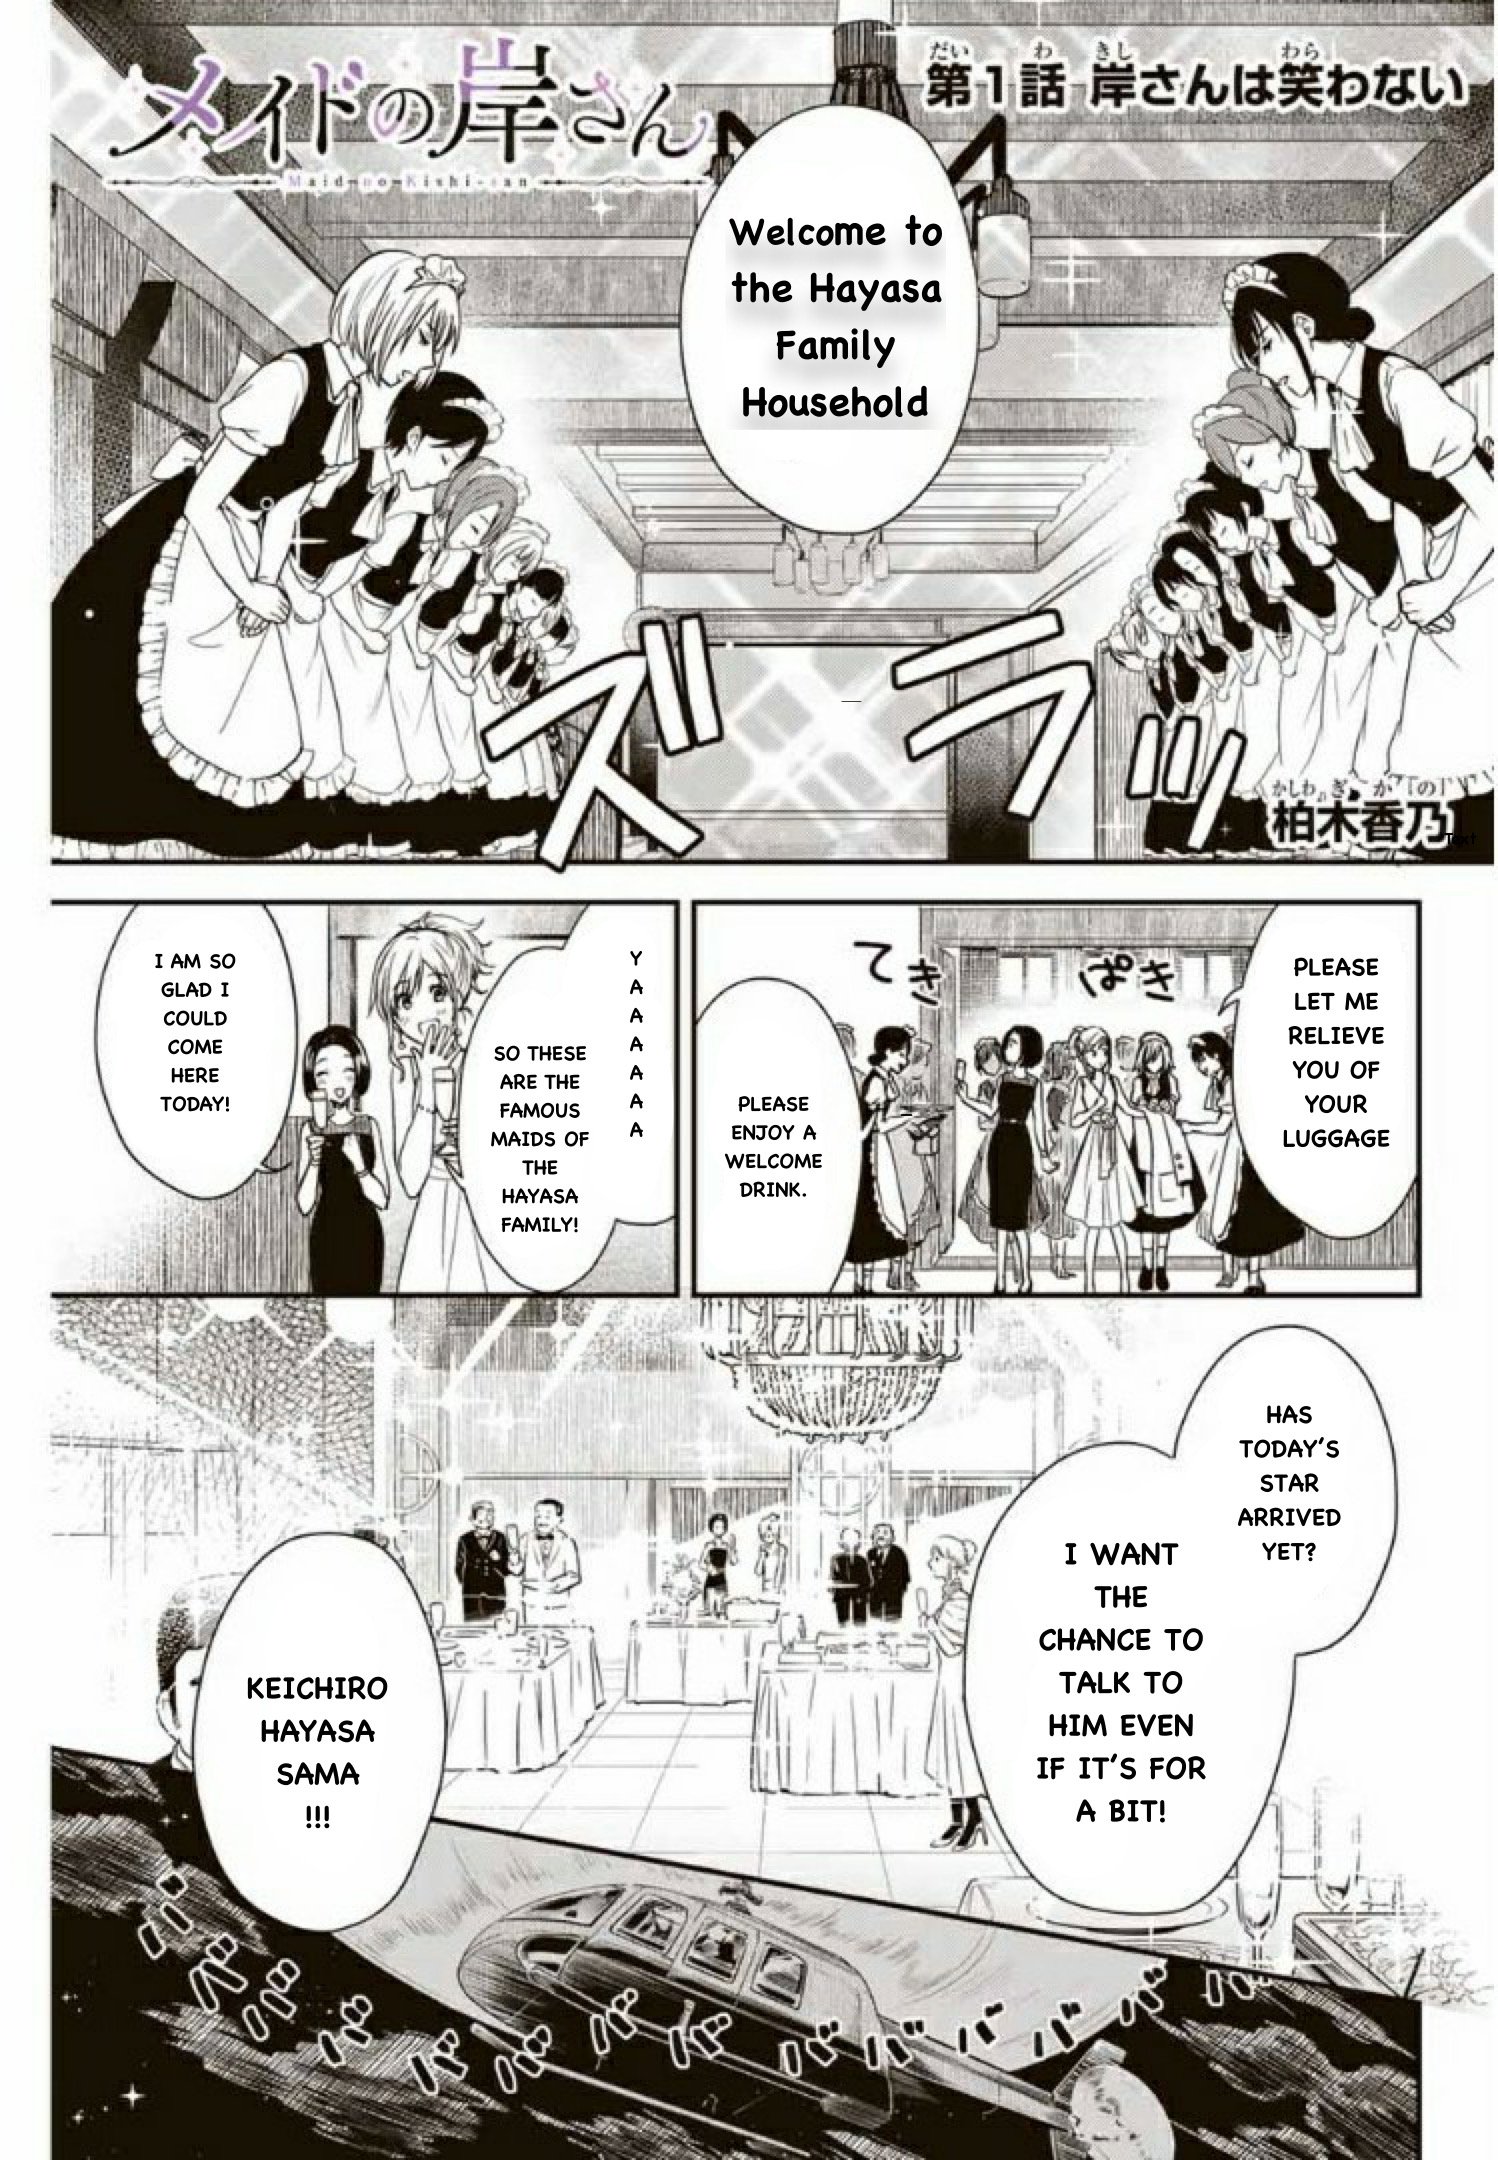 Read Maid No Kishi San Manga English New Chapters Online Free Mangaclash 